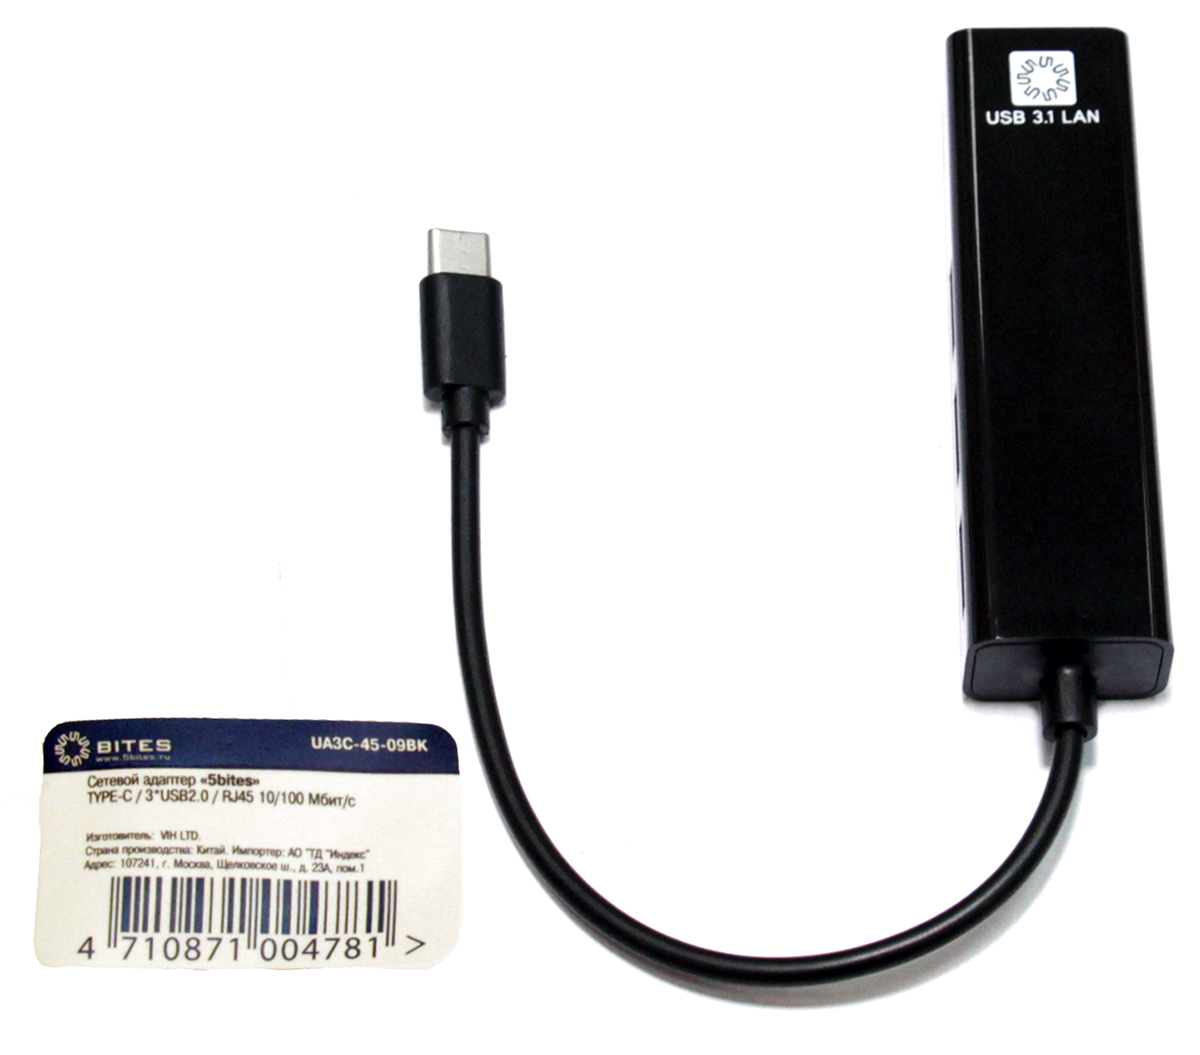 Cетевая карта с USB хабом  UA3C-45-09BK